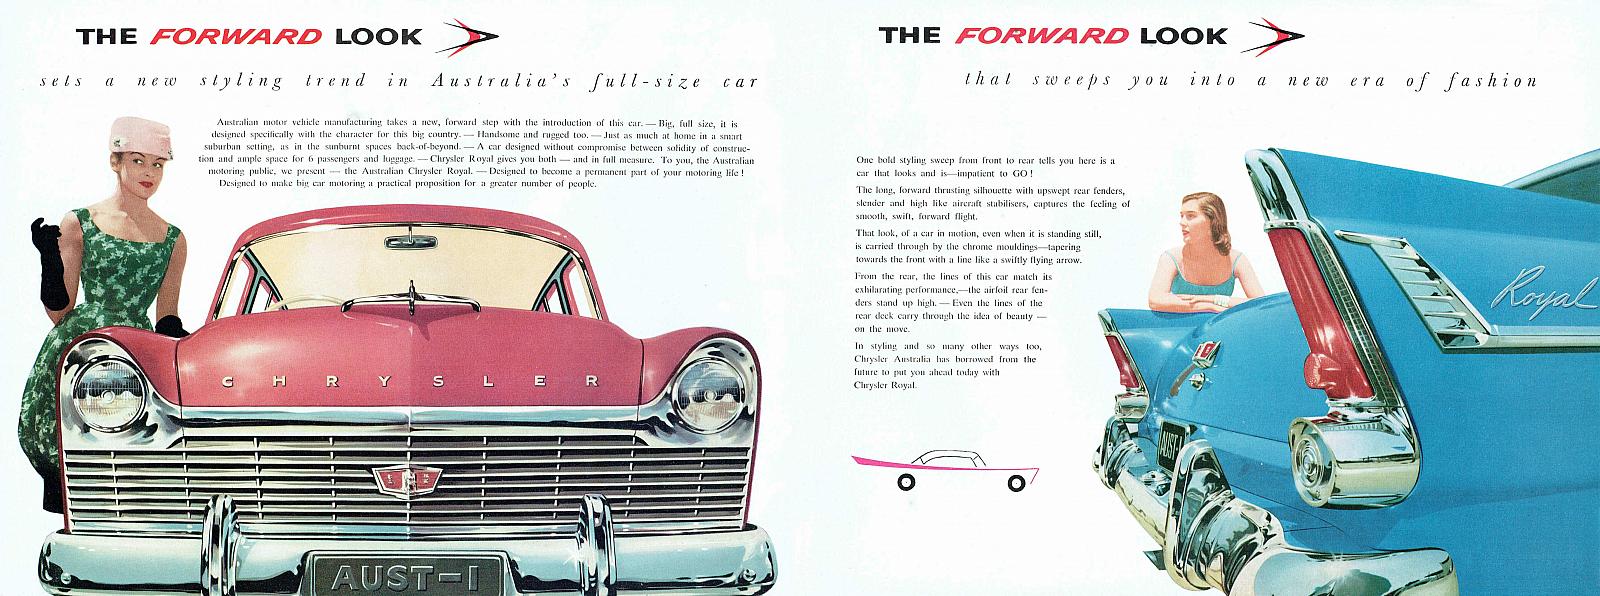 1957 Chrysler AP1 Royal Brochure Page 4